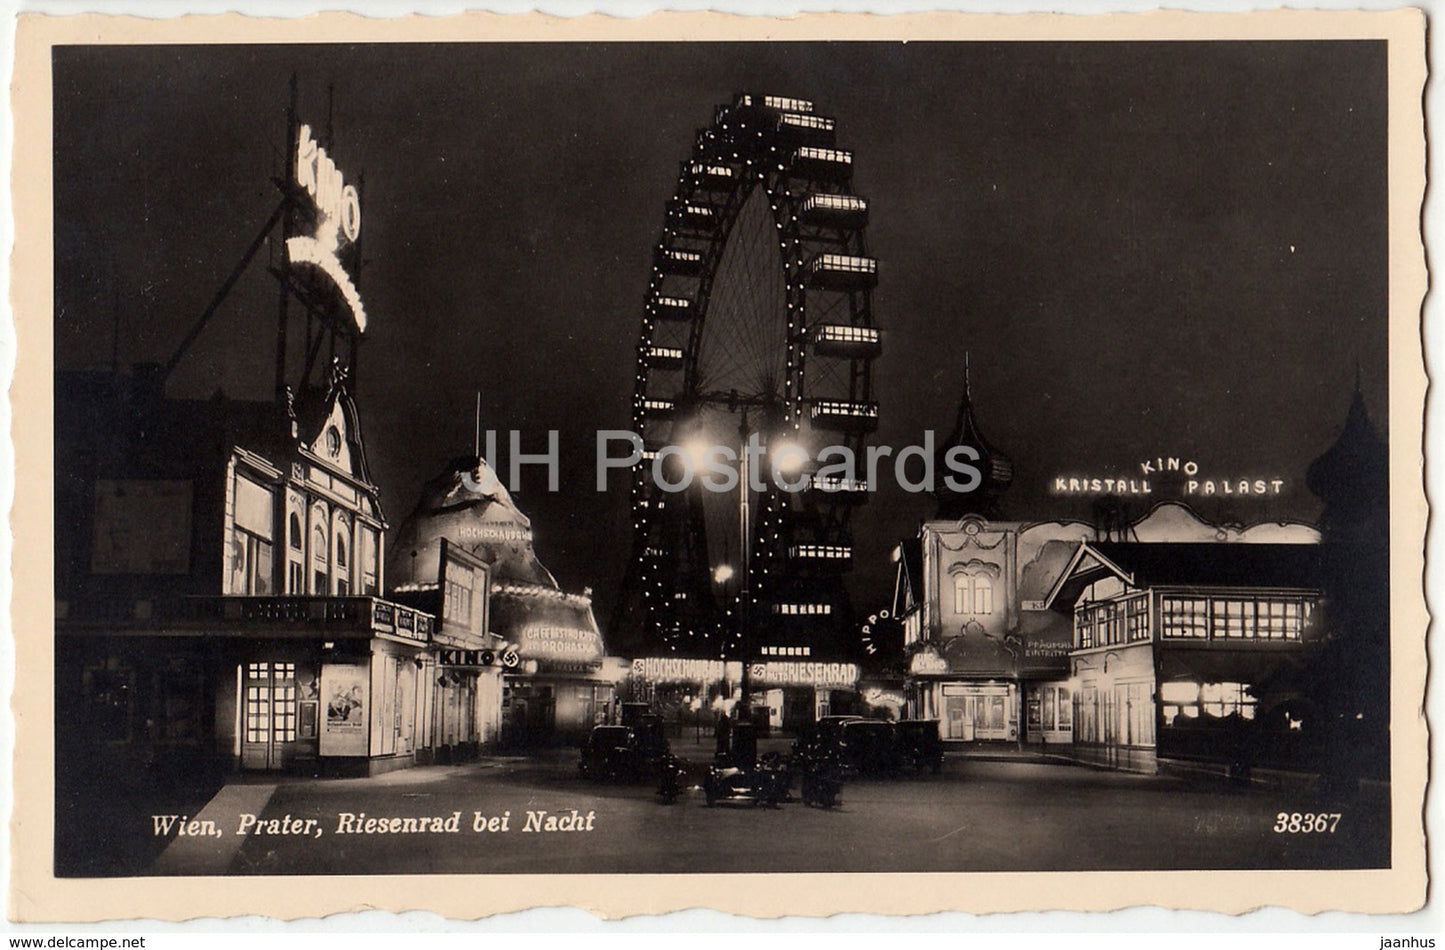 Wien - Vienna - Prater -Riesenrad bei Nacht - cinema Kristall Palast - 38367 - 1942 - Austria - used - JH Postcards